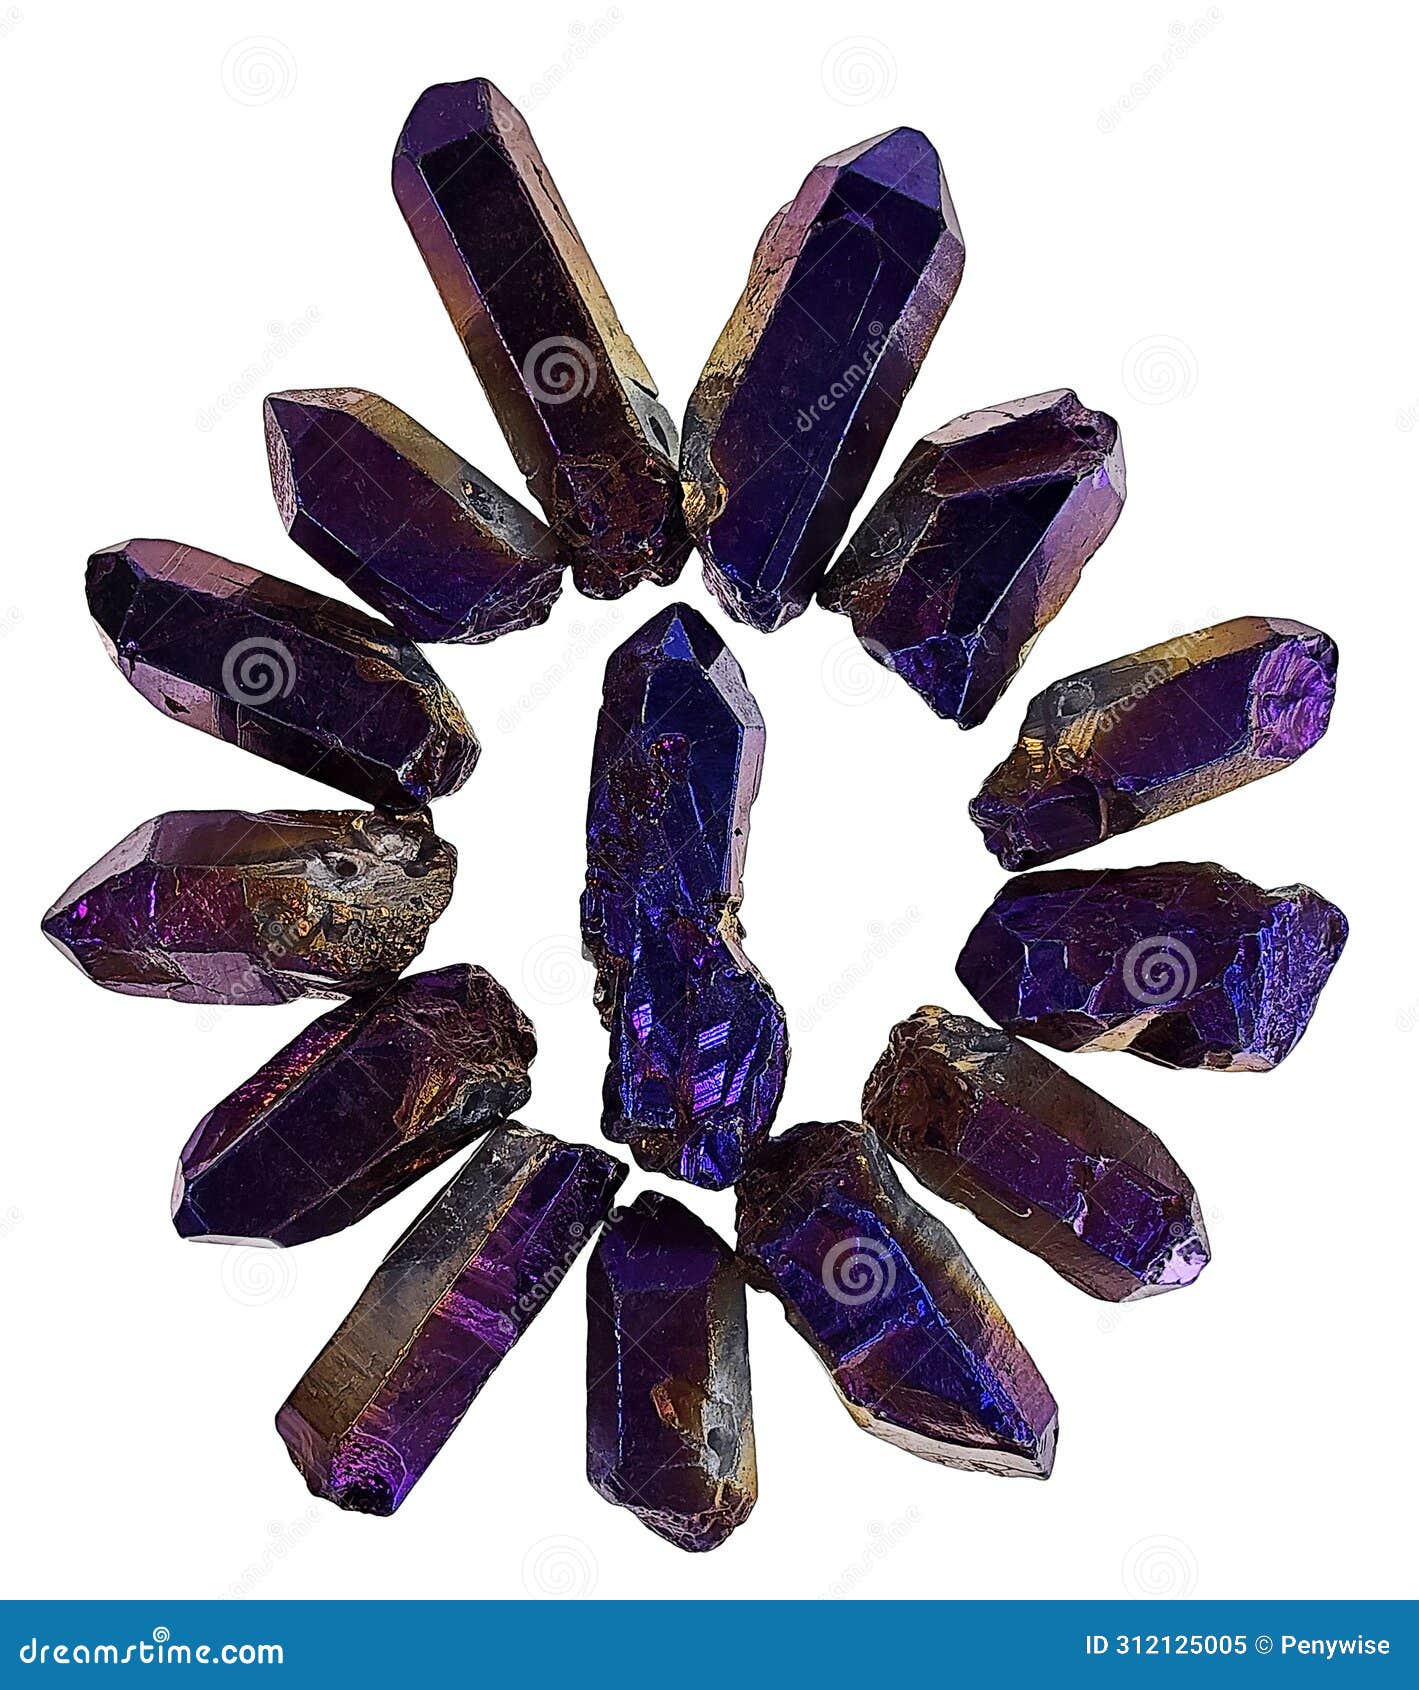 purple hued crystals